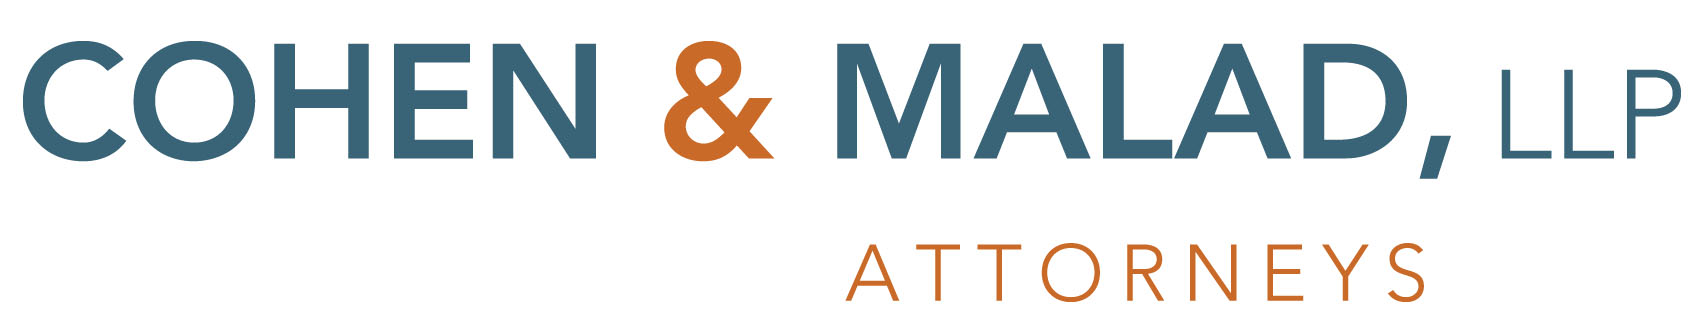 Cohen & Malad, LLP logo